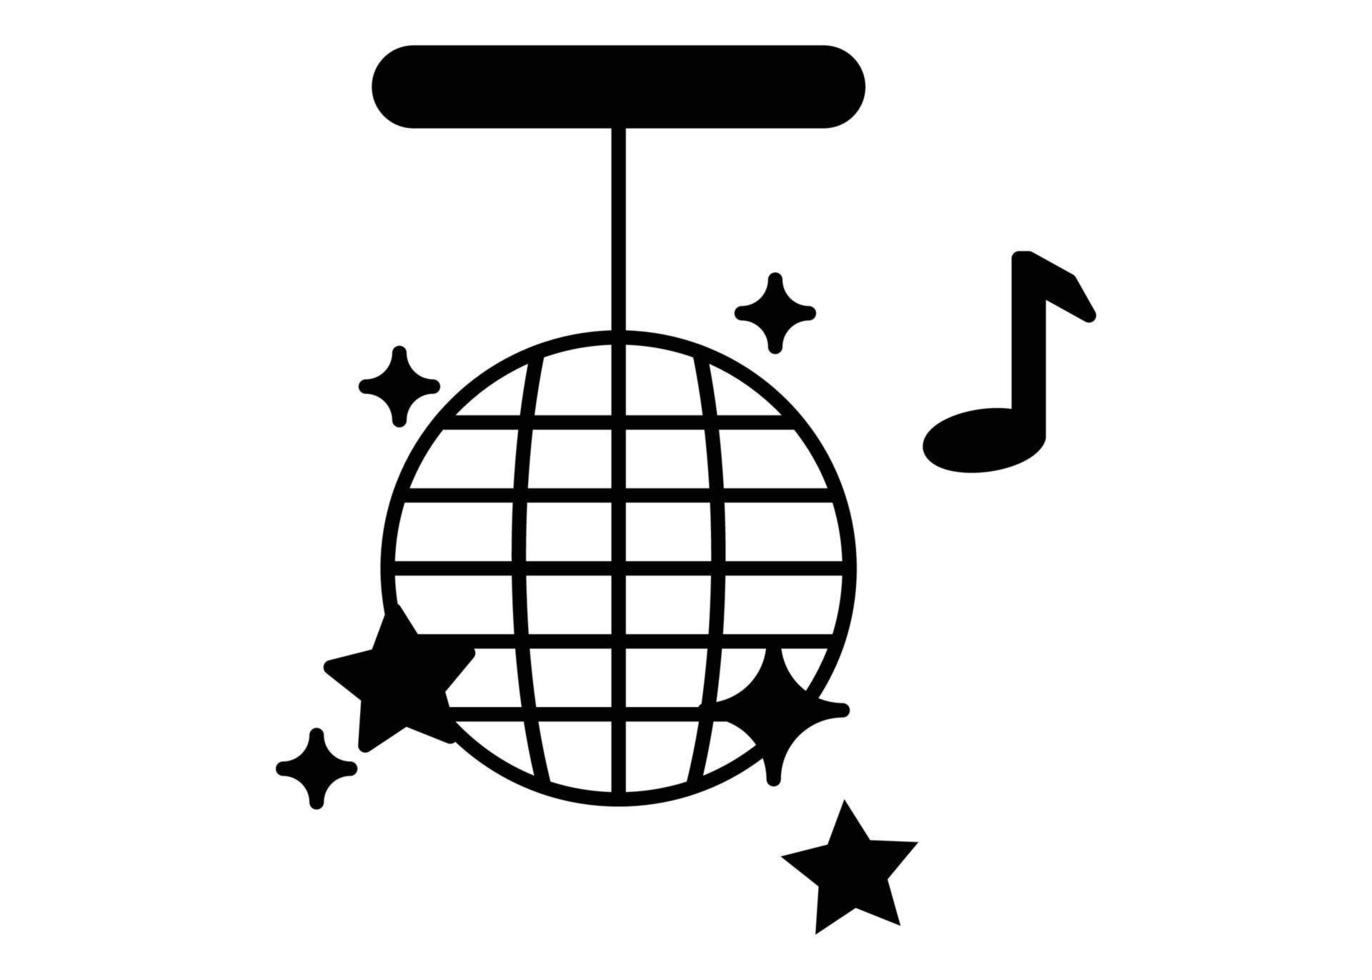 Disco party icon silhouette clipart illustration design vector